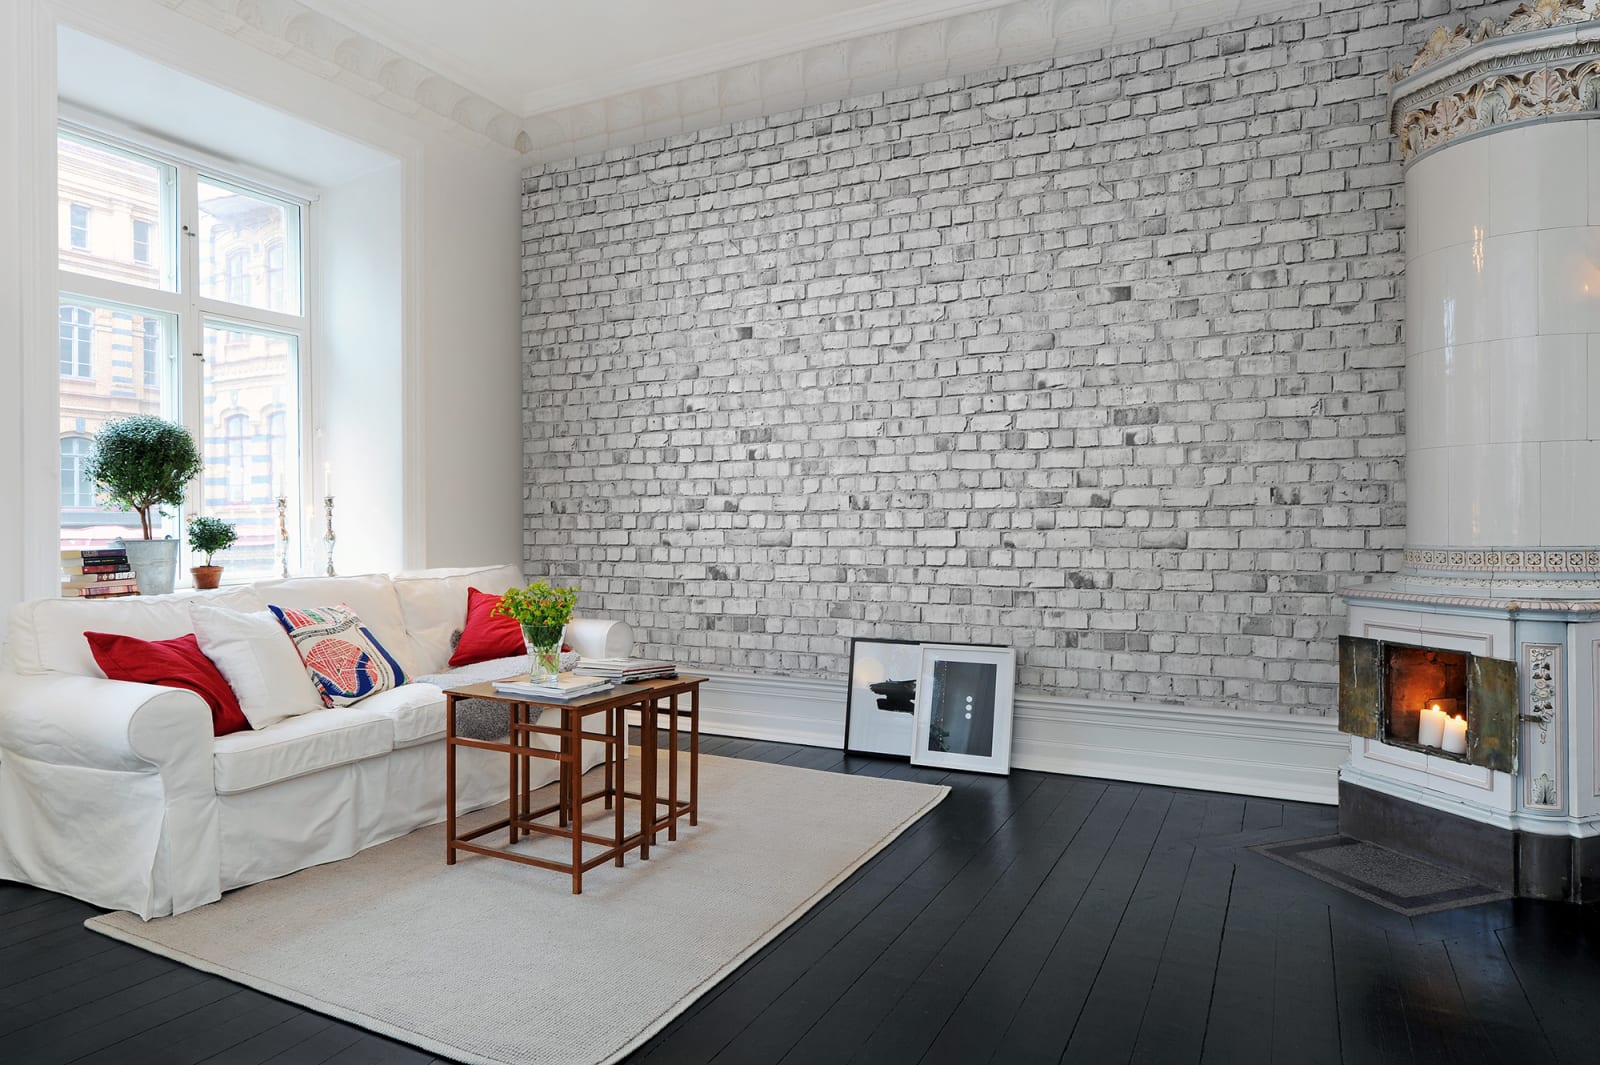 Fototapet Brick Wall, White, personalizat, Rebel Walls